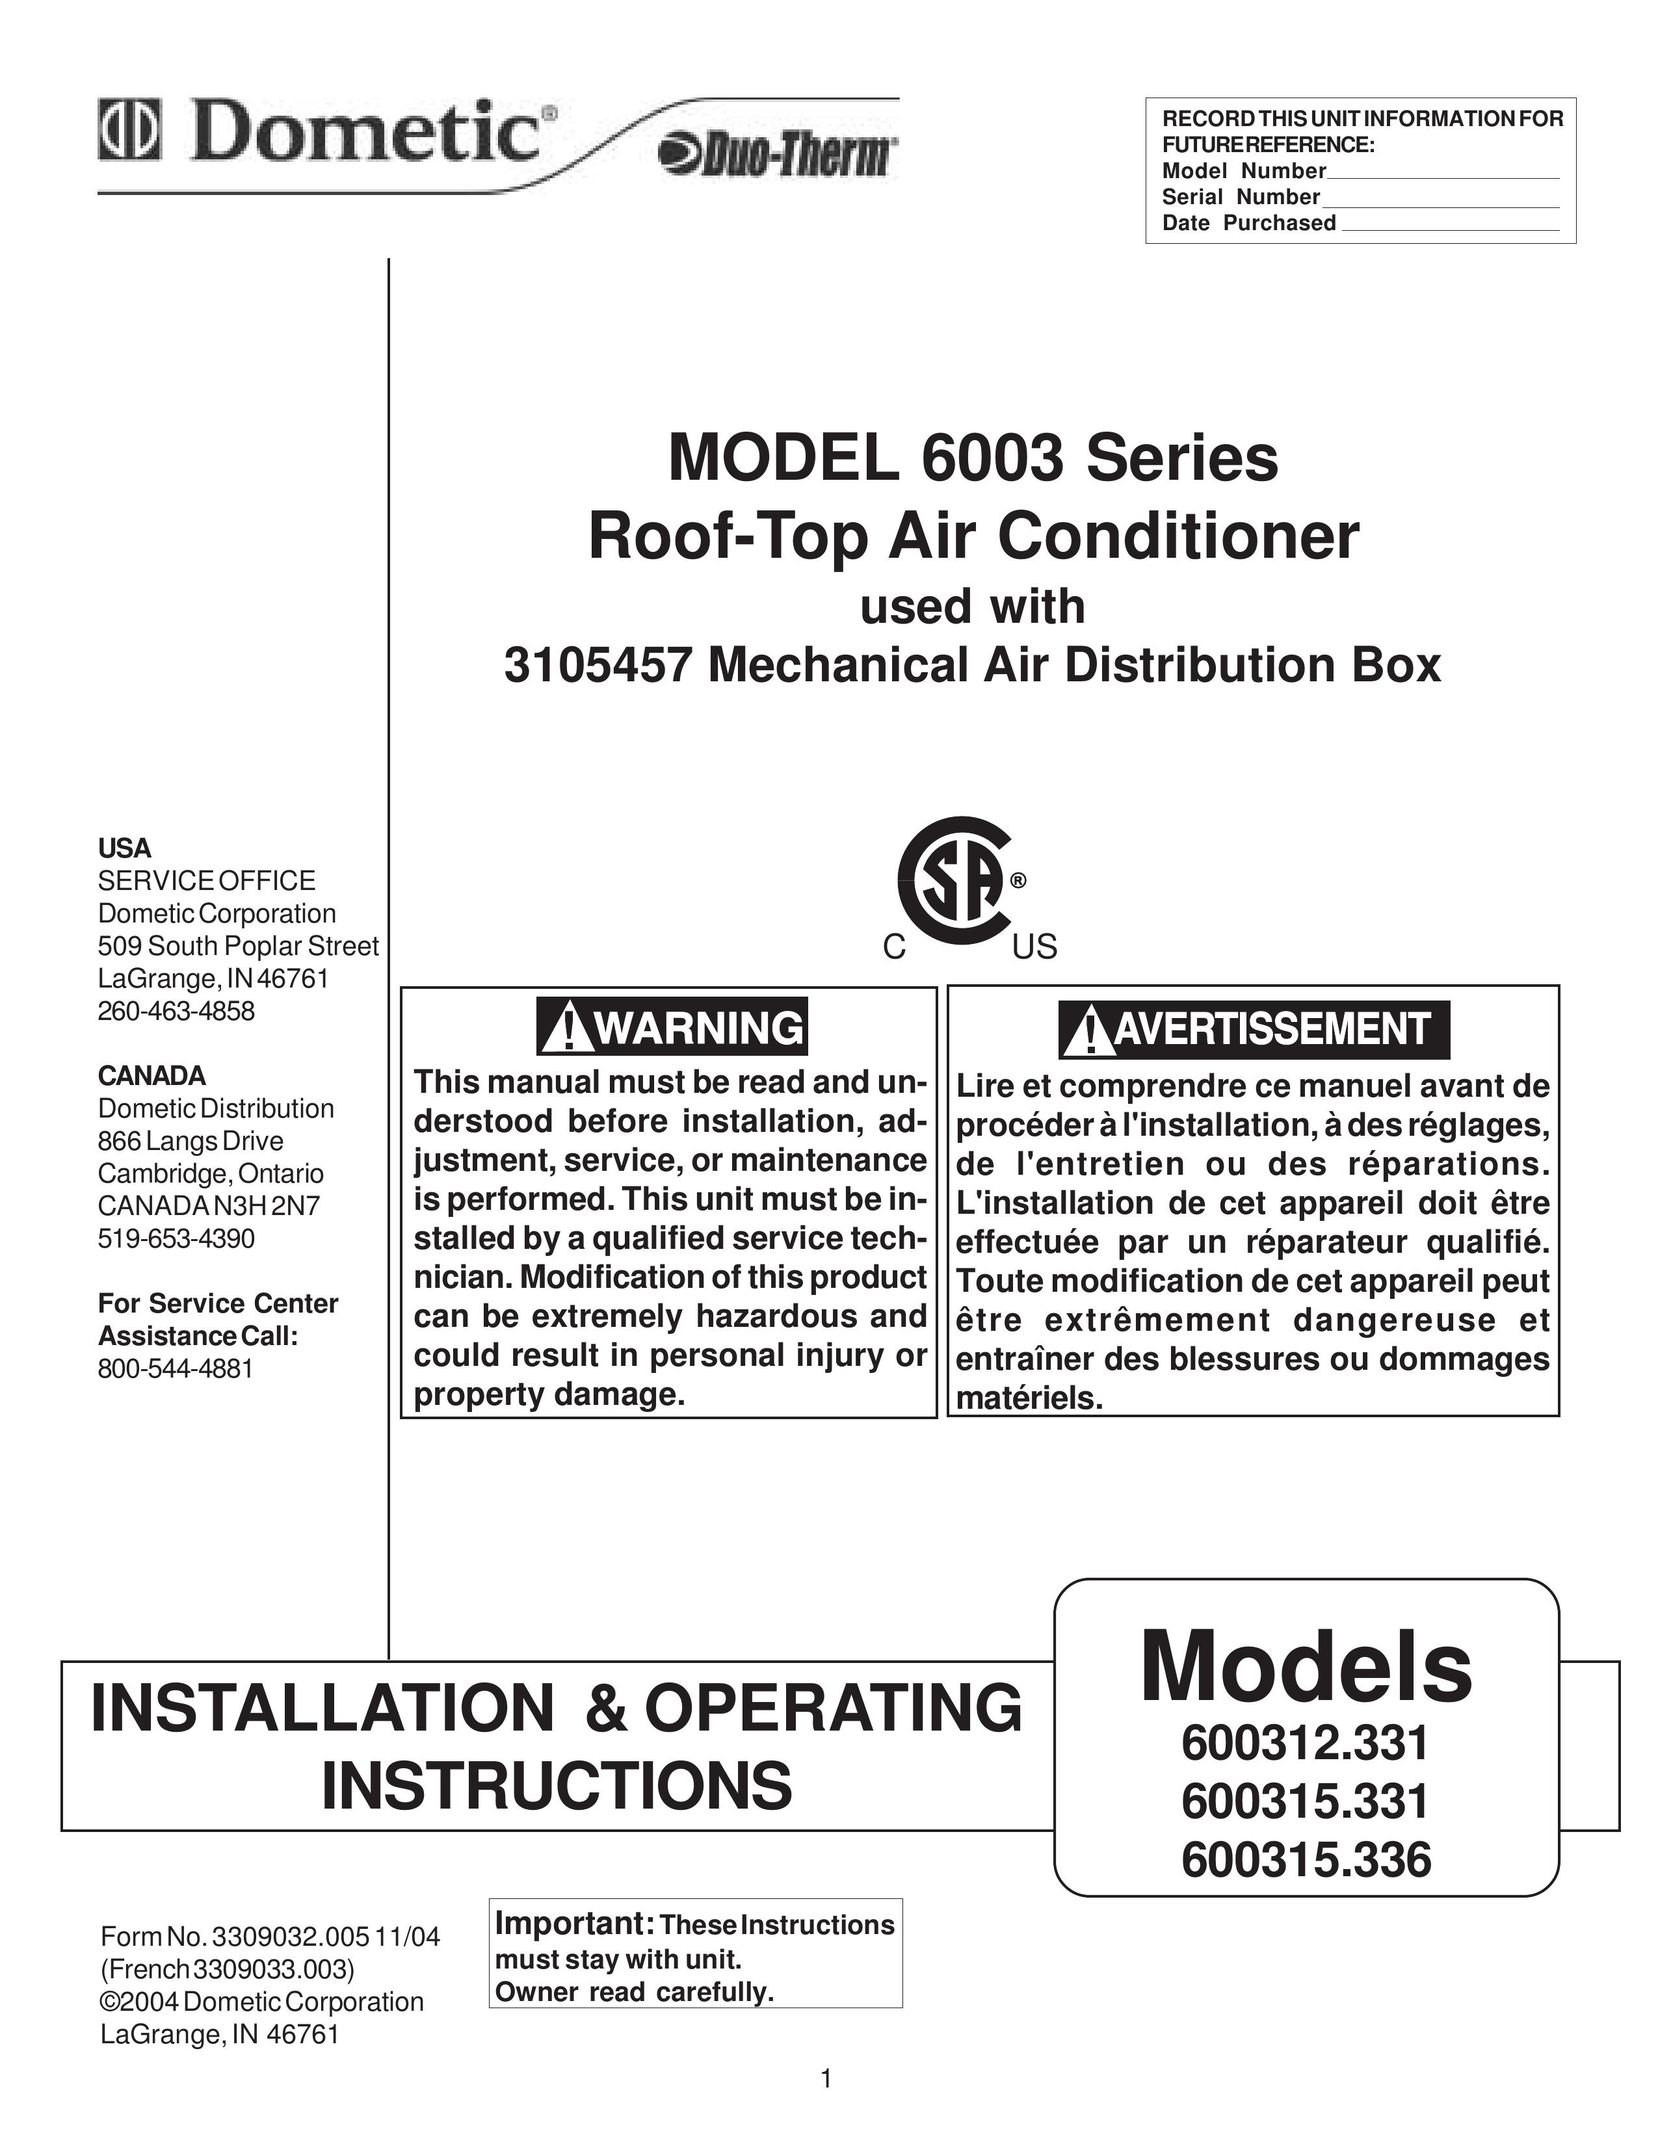 Dometic 600315.336 Air Conditioner User Manual